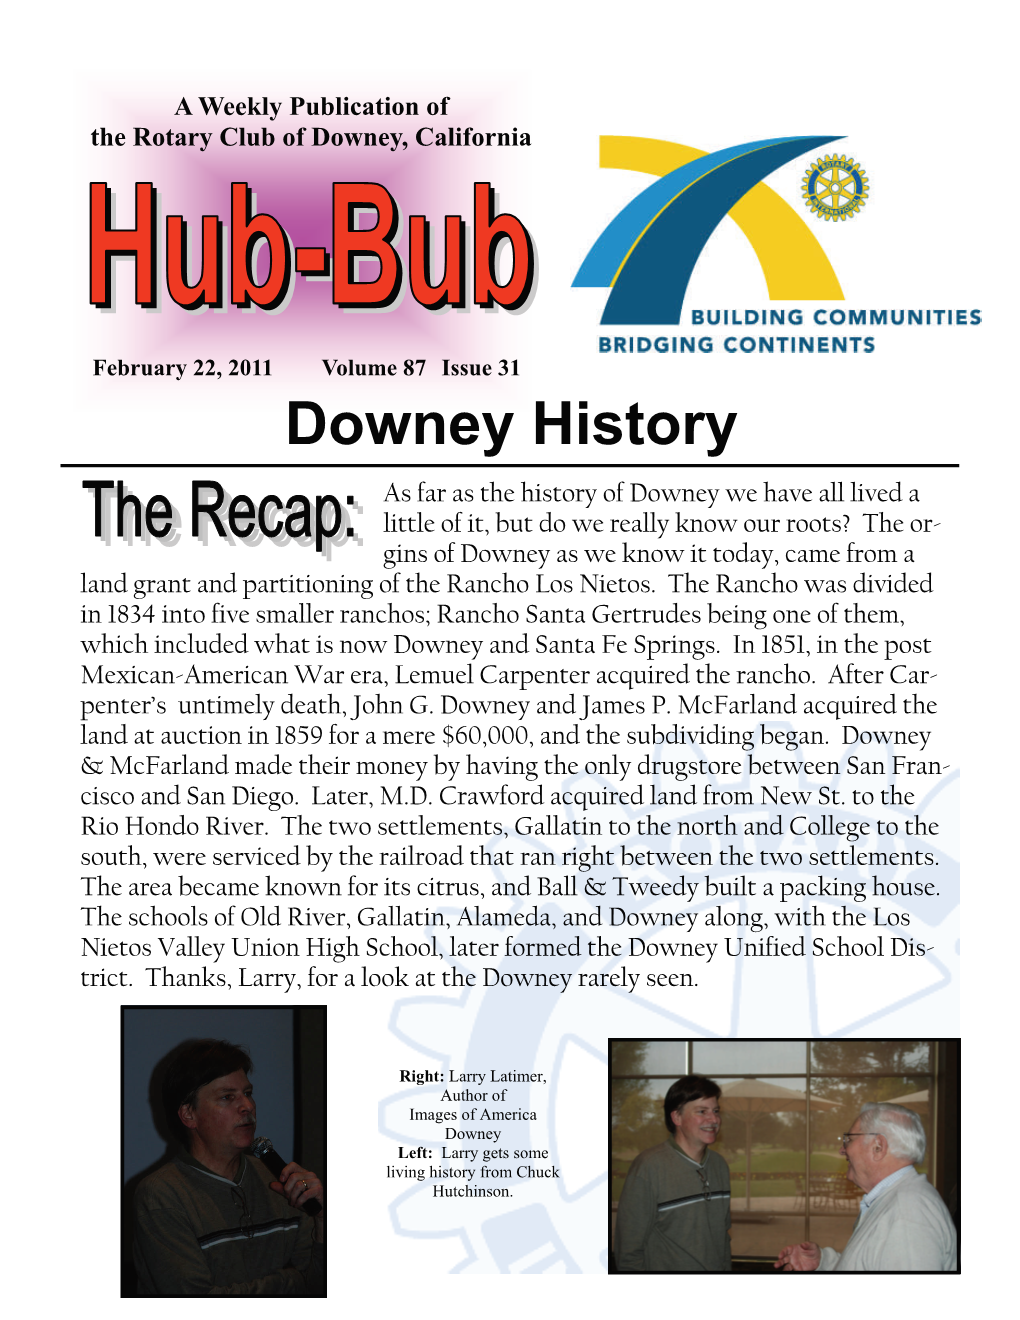 Downey History